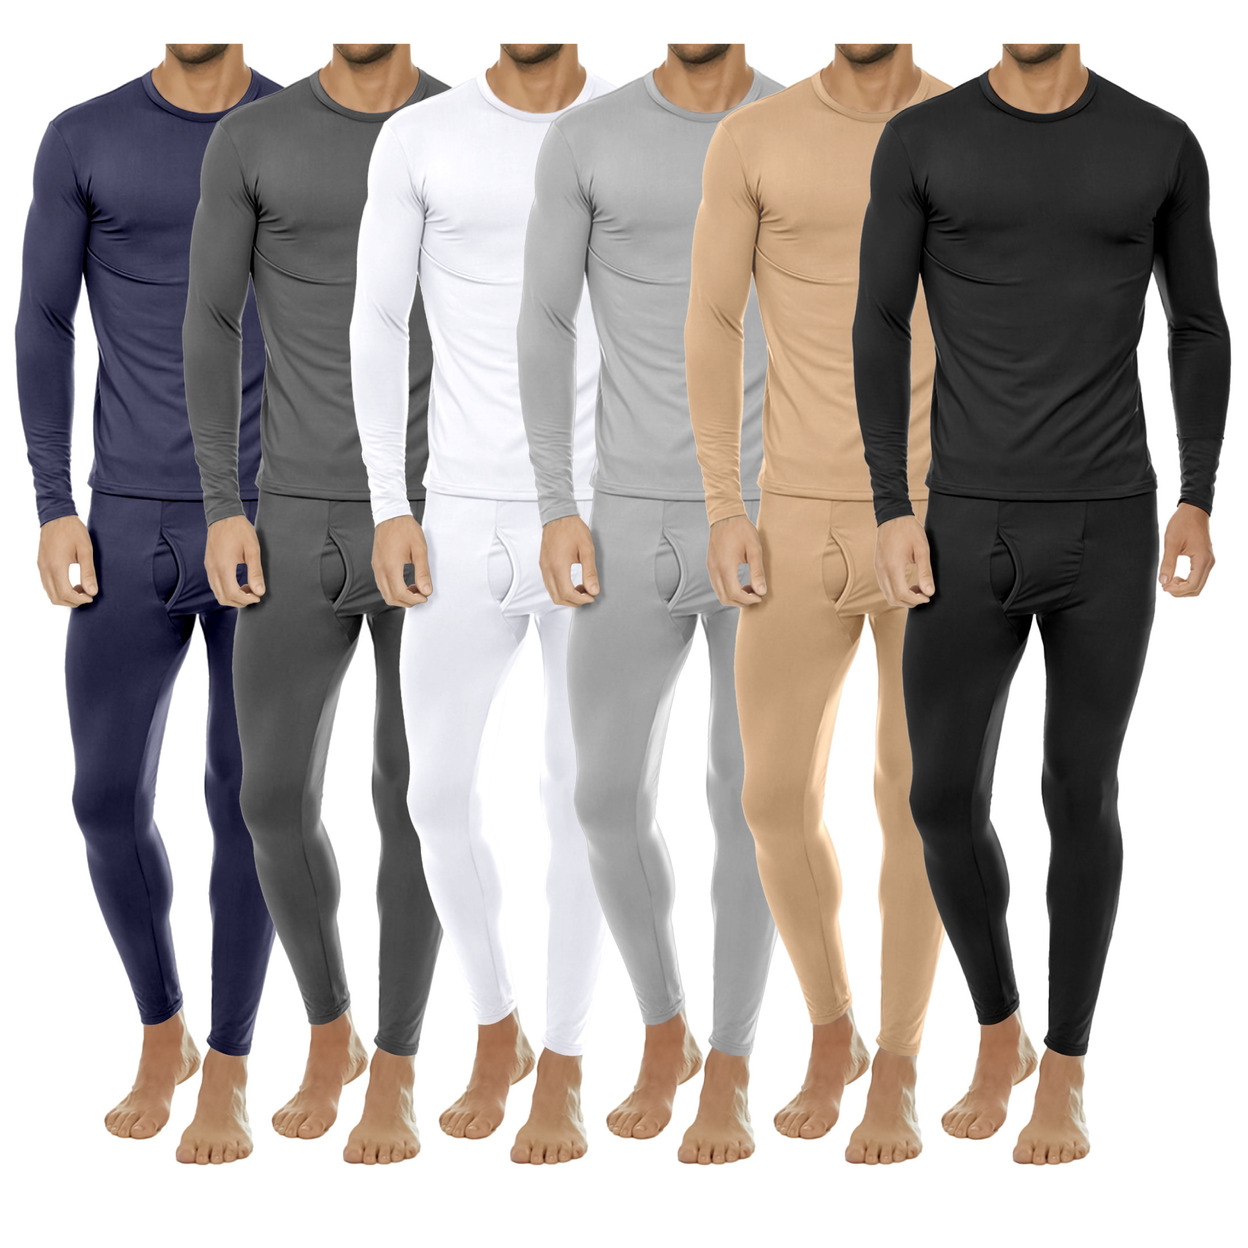 2-Pieces: Men's Winter Warm Fleece Lined Thermal Underwear Set For Cold Weather - Black, Medium